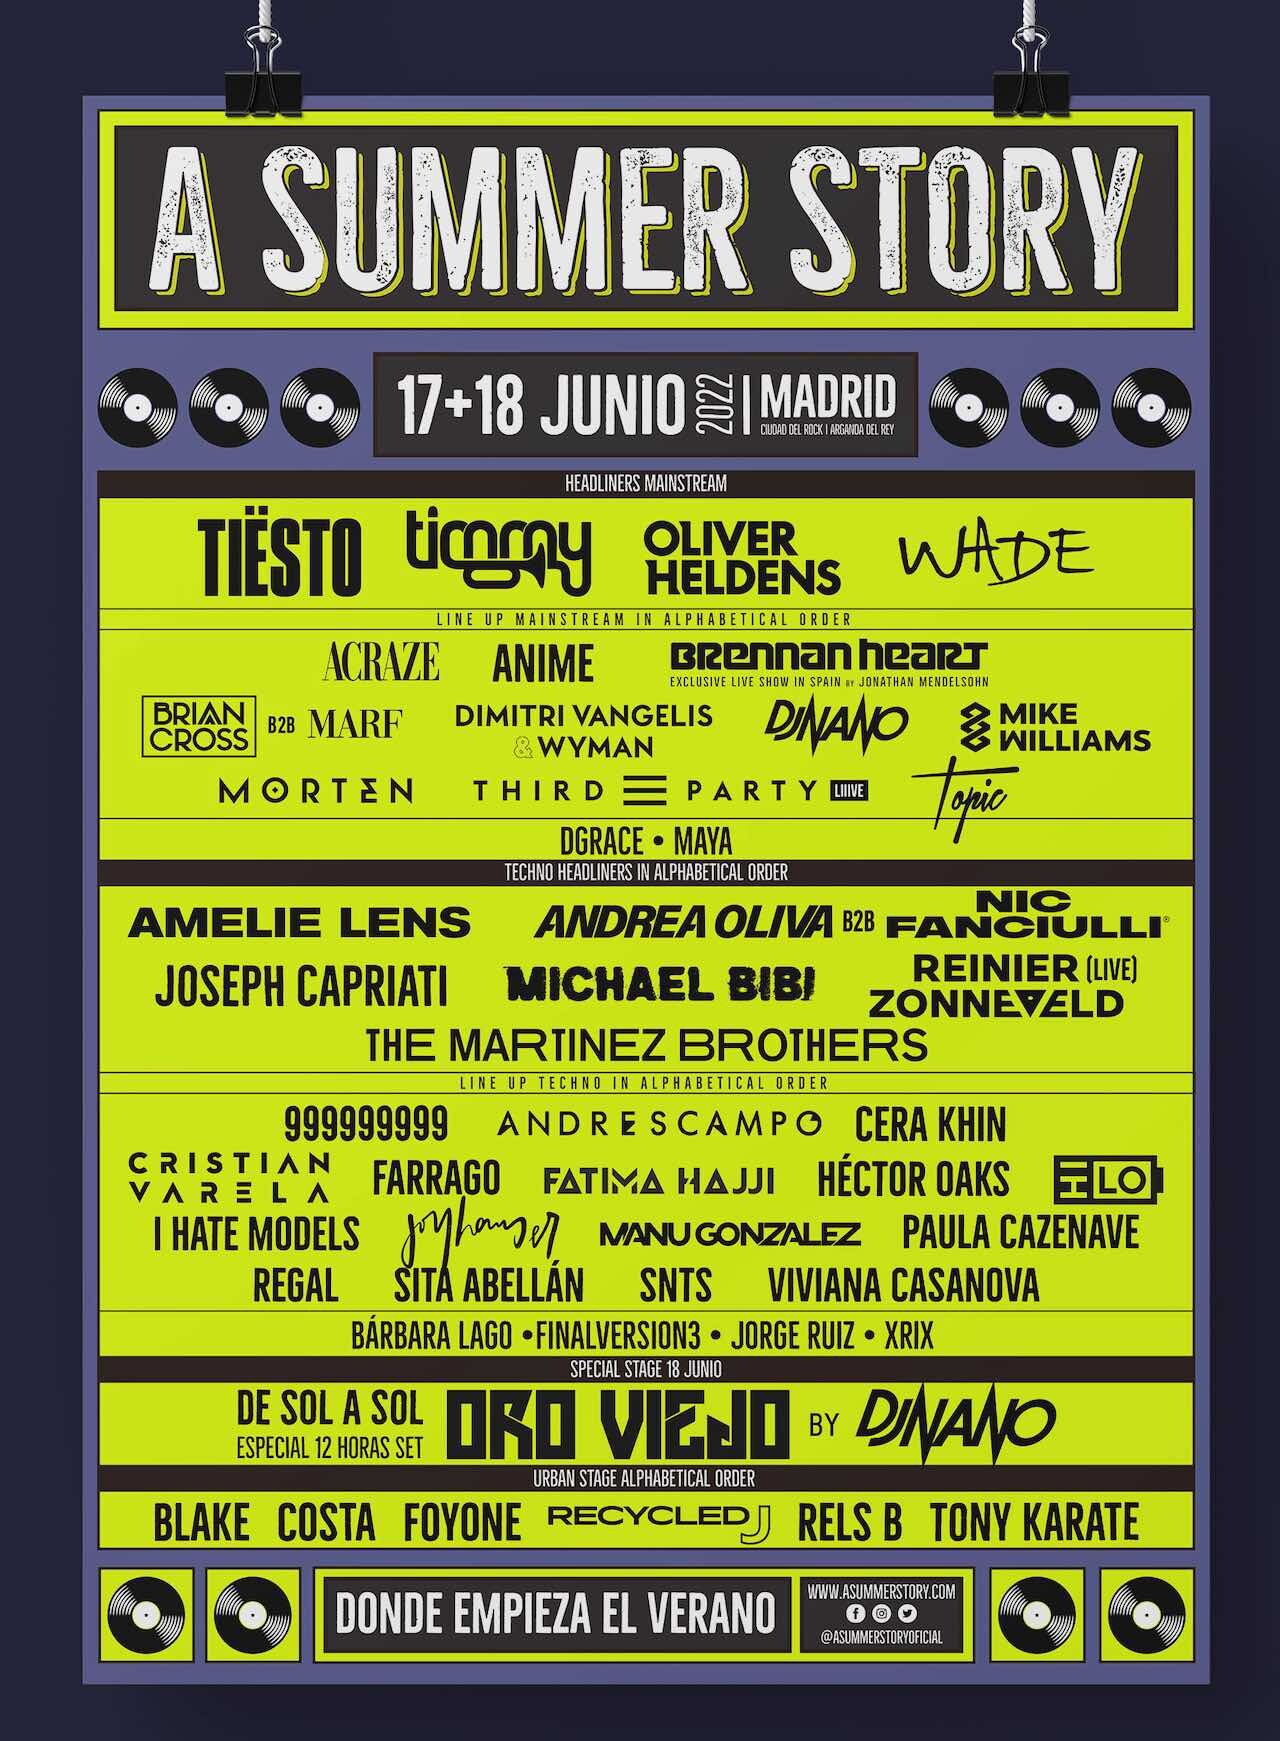 Cartel del Festival A Summer Story